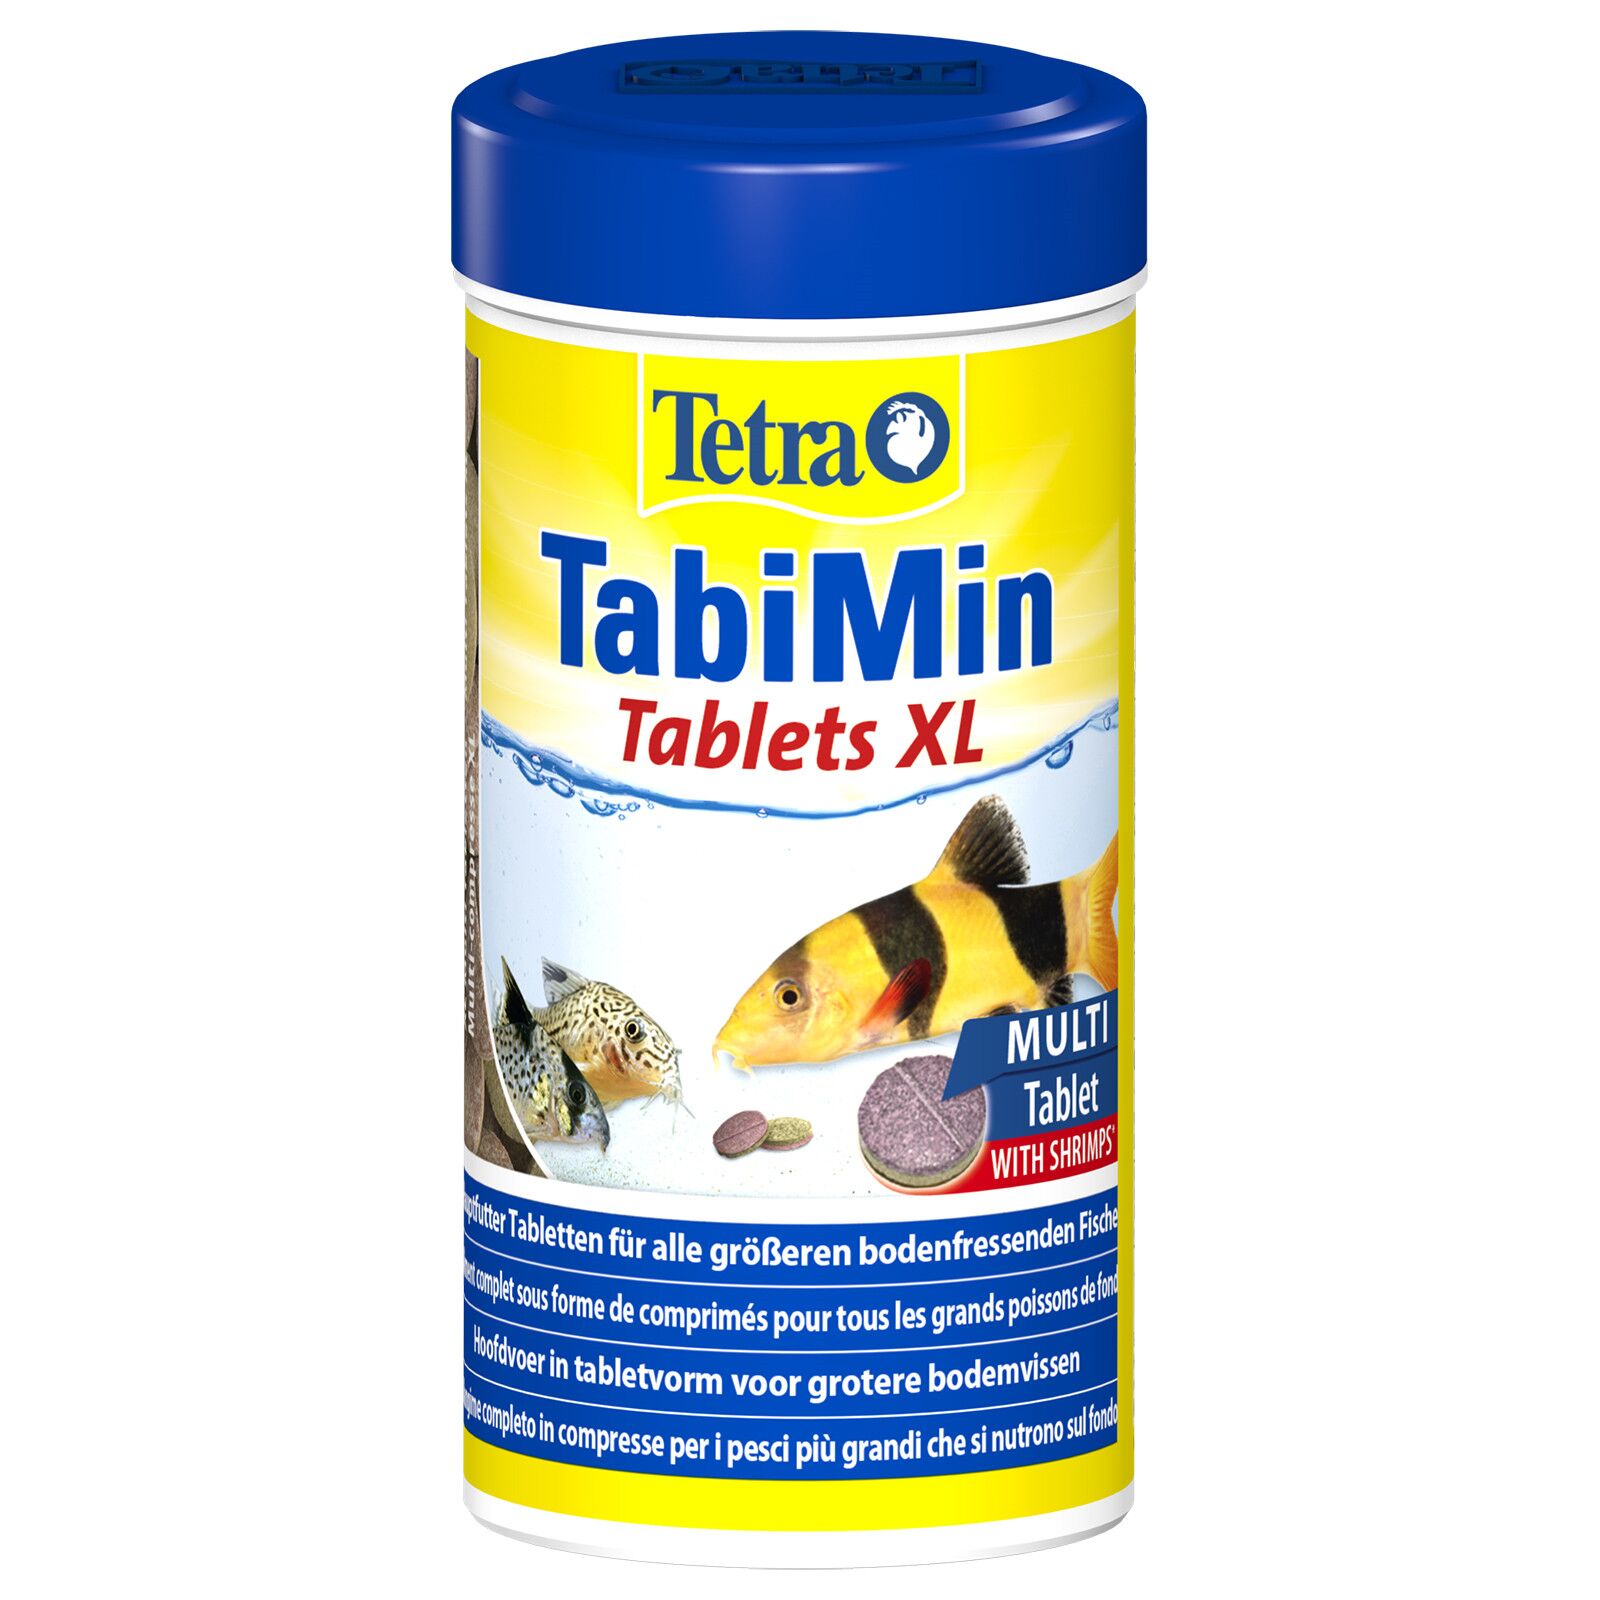 Tetra Tablets TabiMin XL 133 pcs